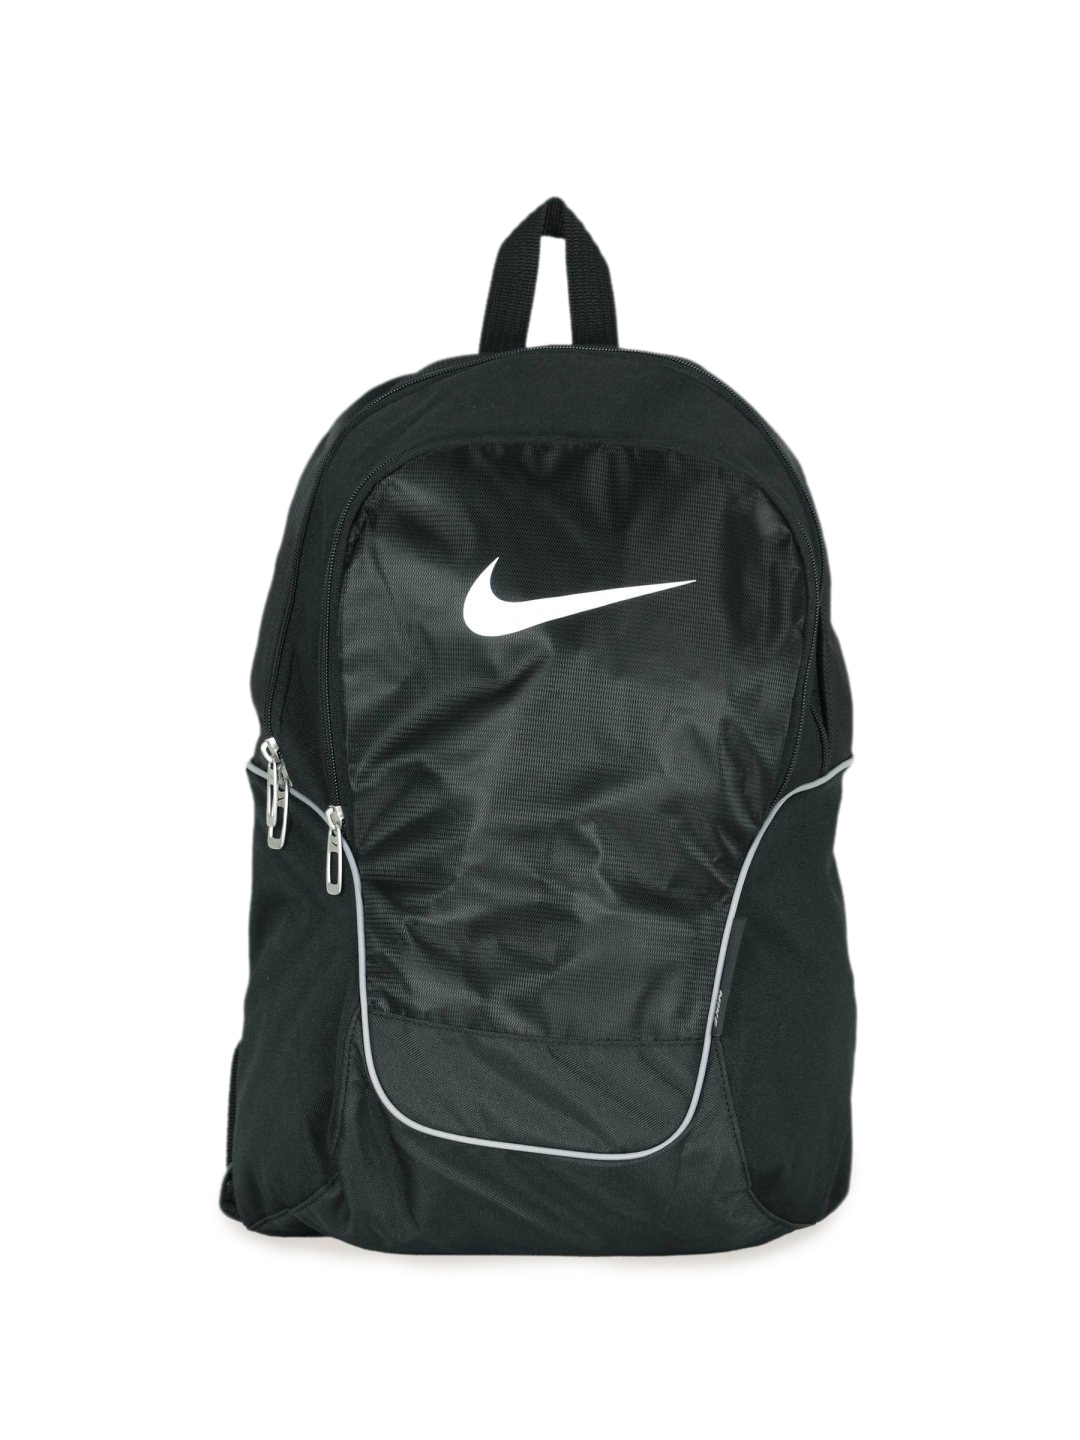 Nike Unisex Medium Black Backpack